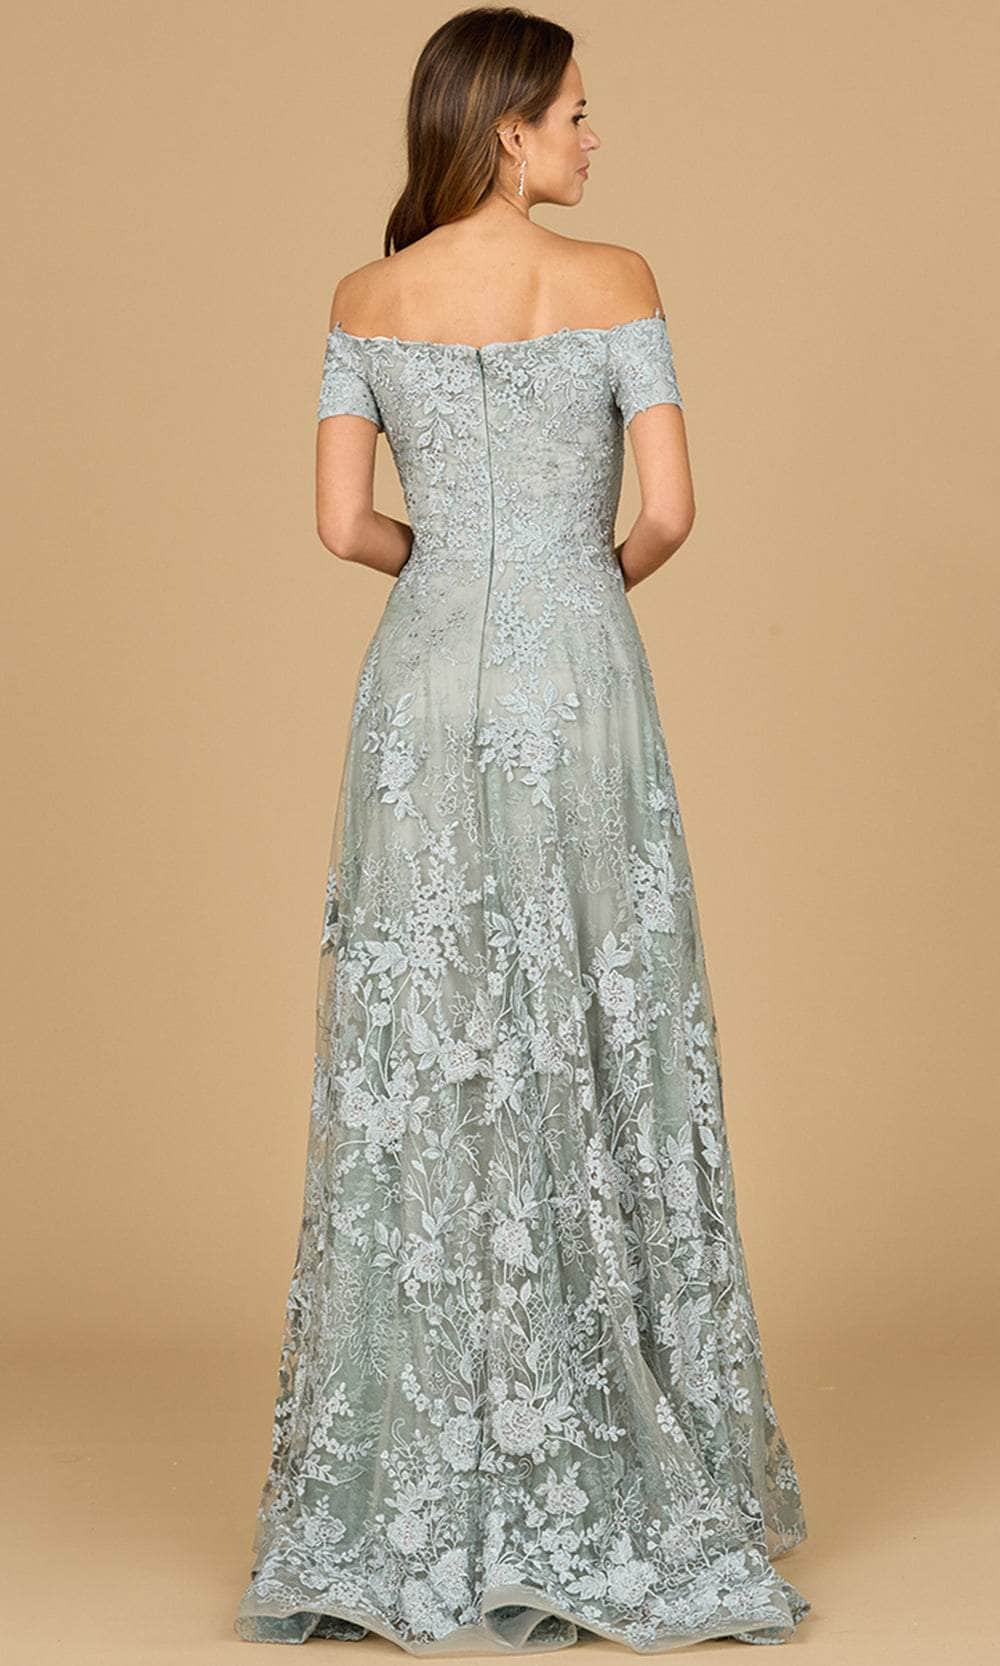 Lara Dresses 29122 - Lace Detail Evening Gown